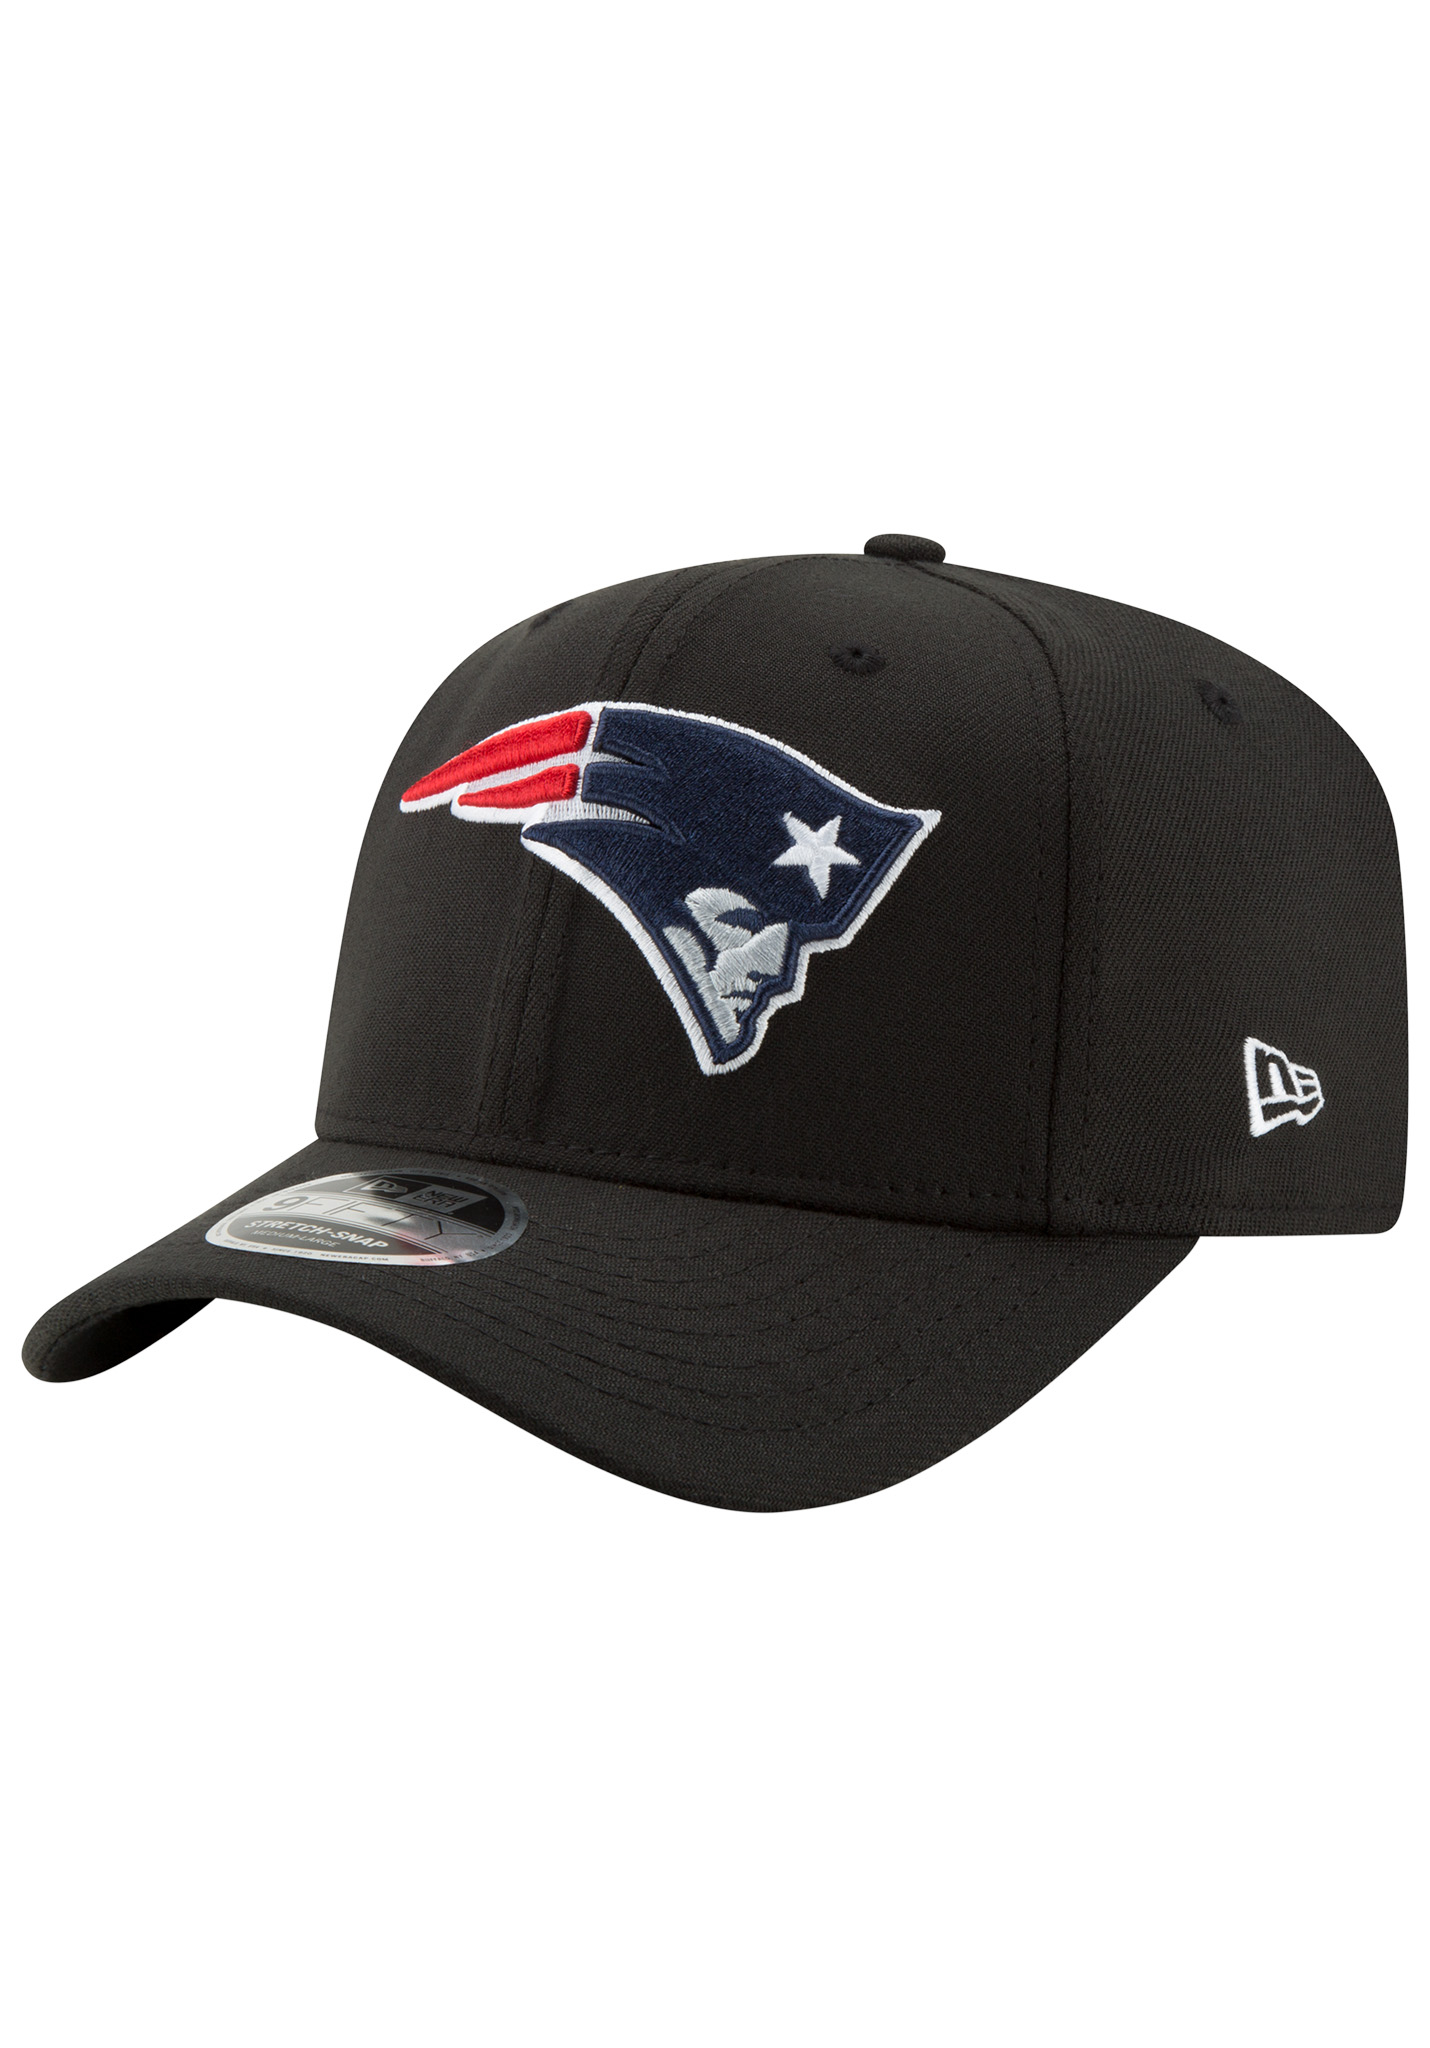 New Era 9Fifty Stretch New England Patriots Snapback Cap schwarz/offizielle teamfarbe M/L